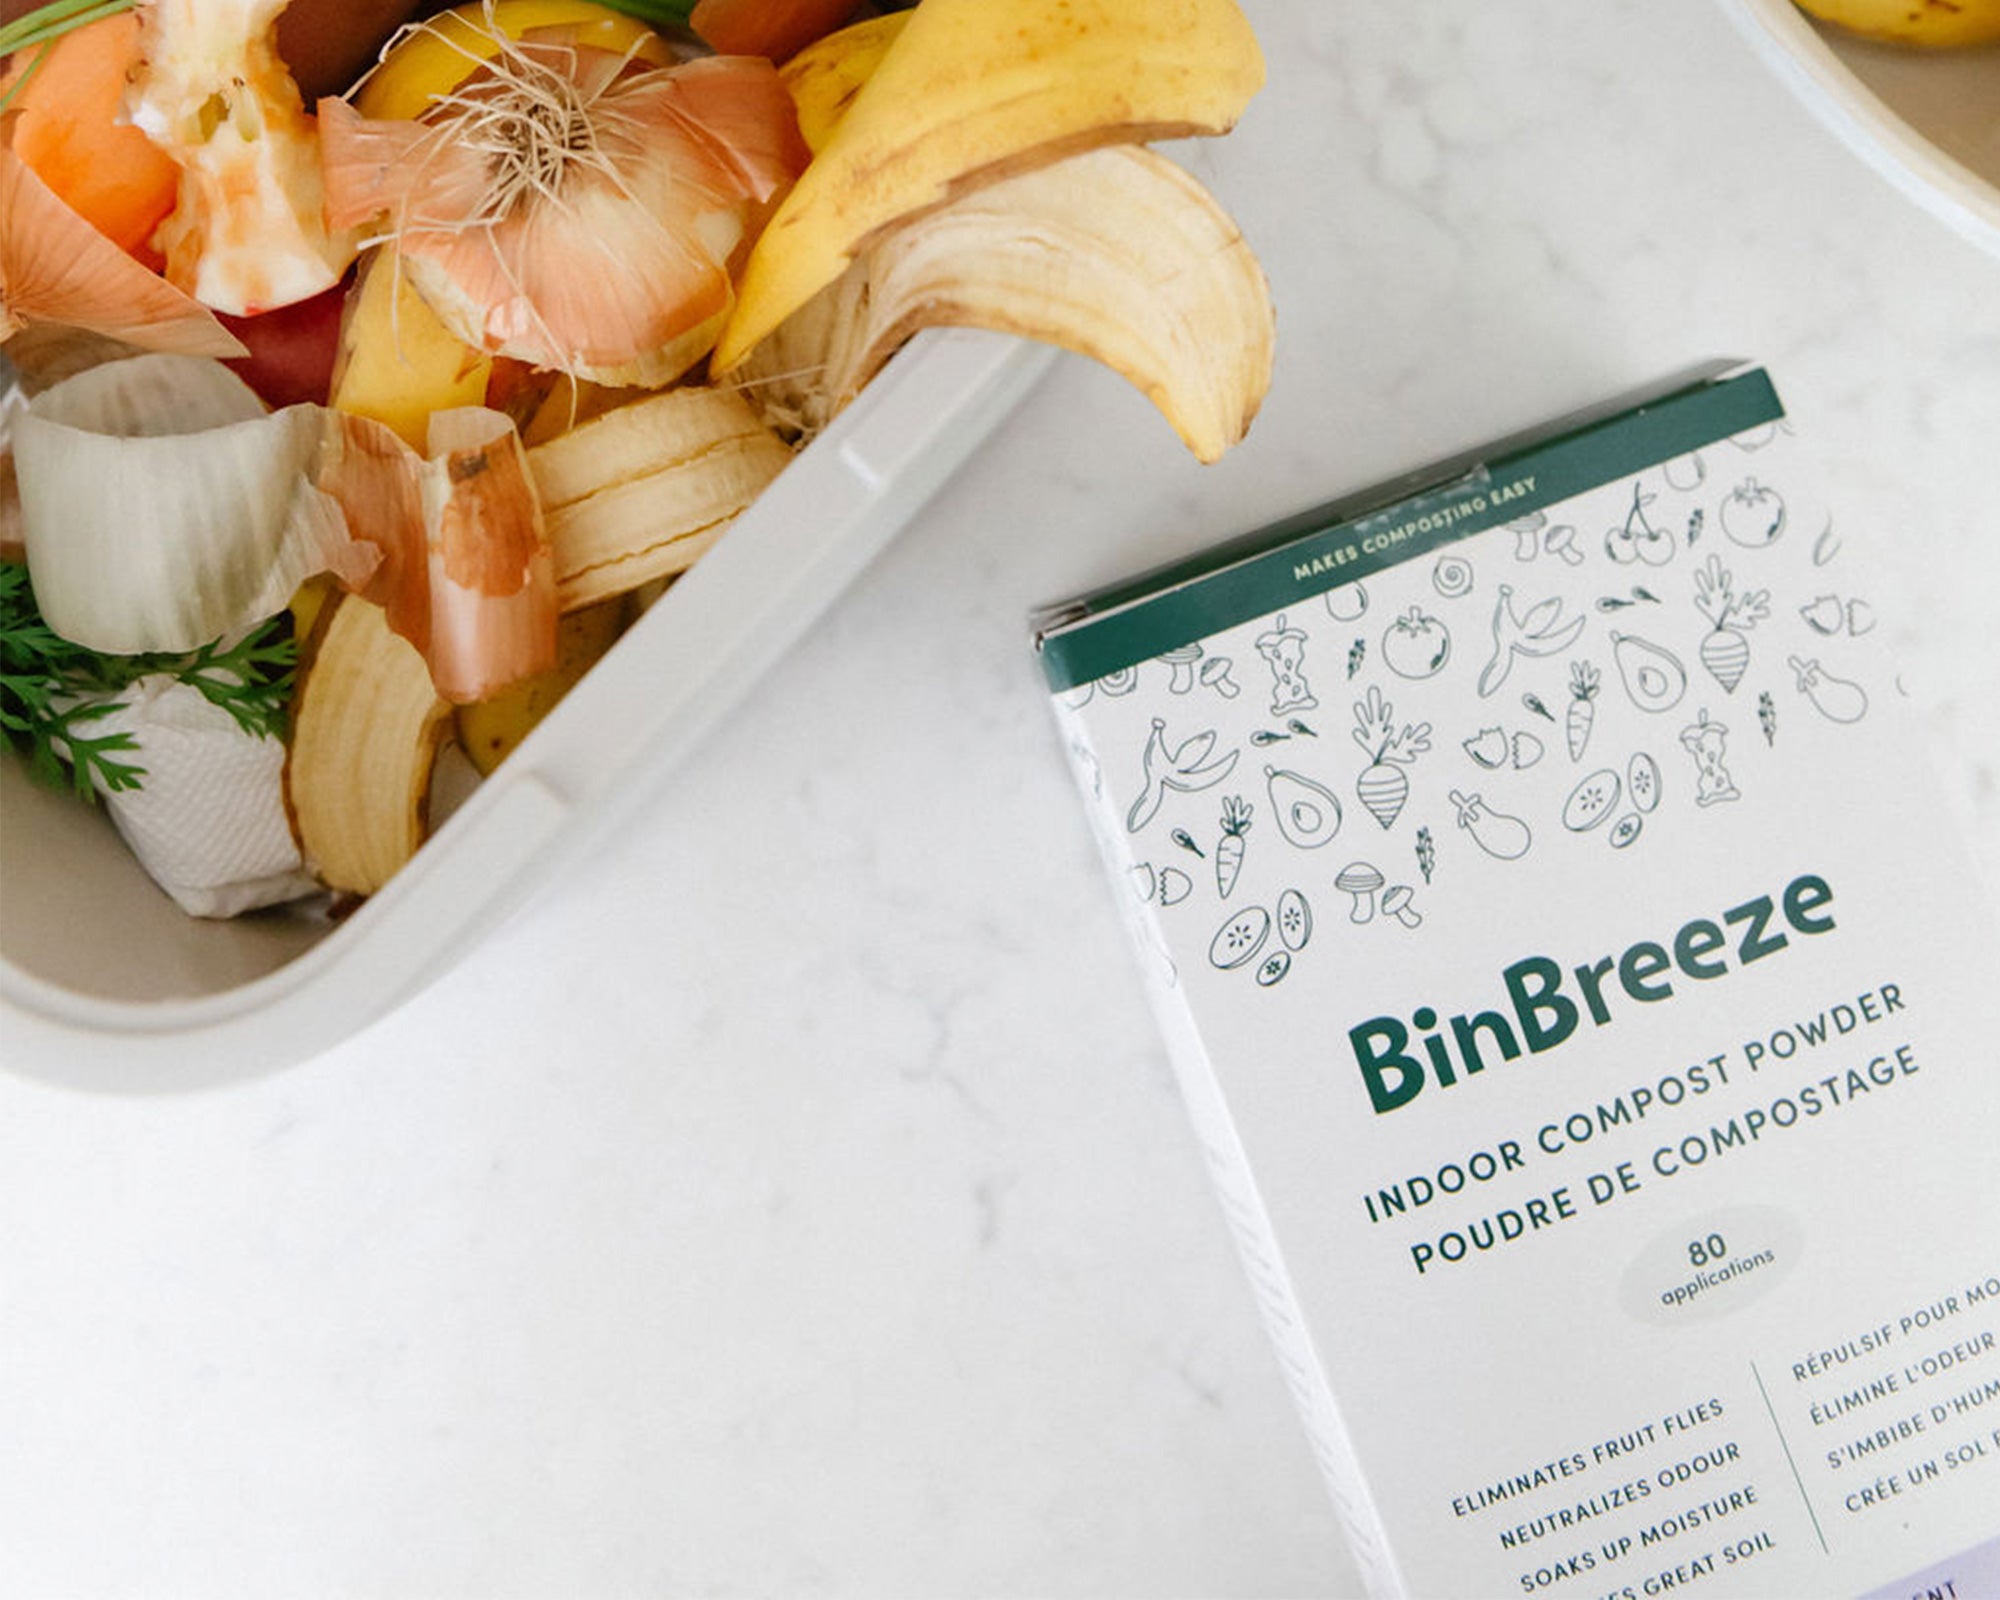 BinBreeze compost powder for fruit flies and odour